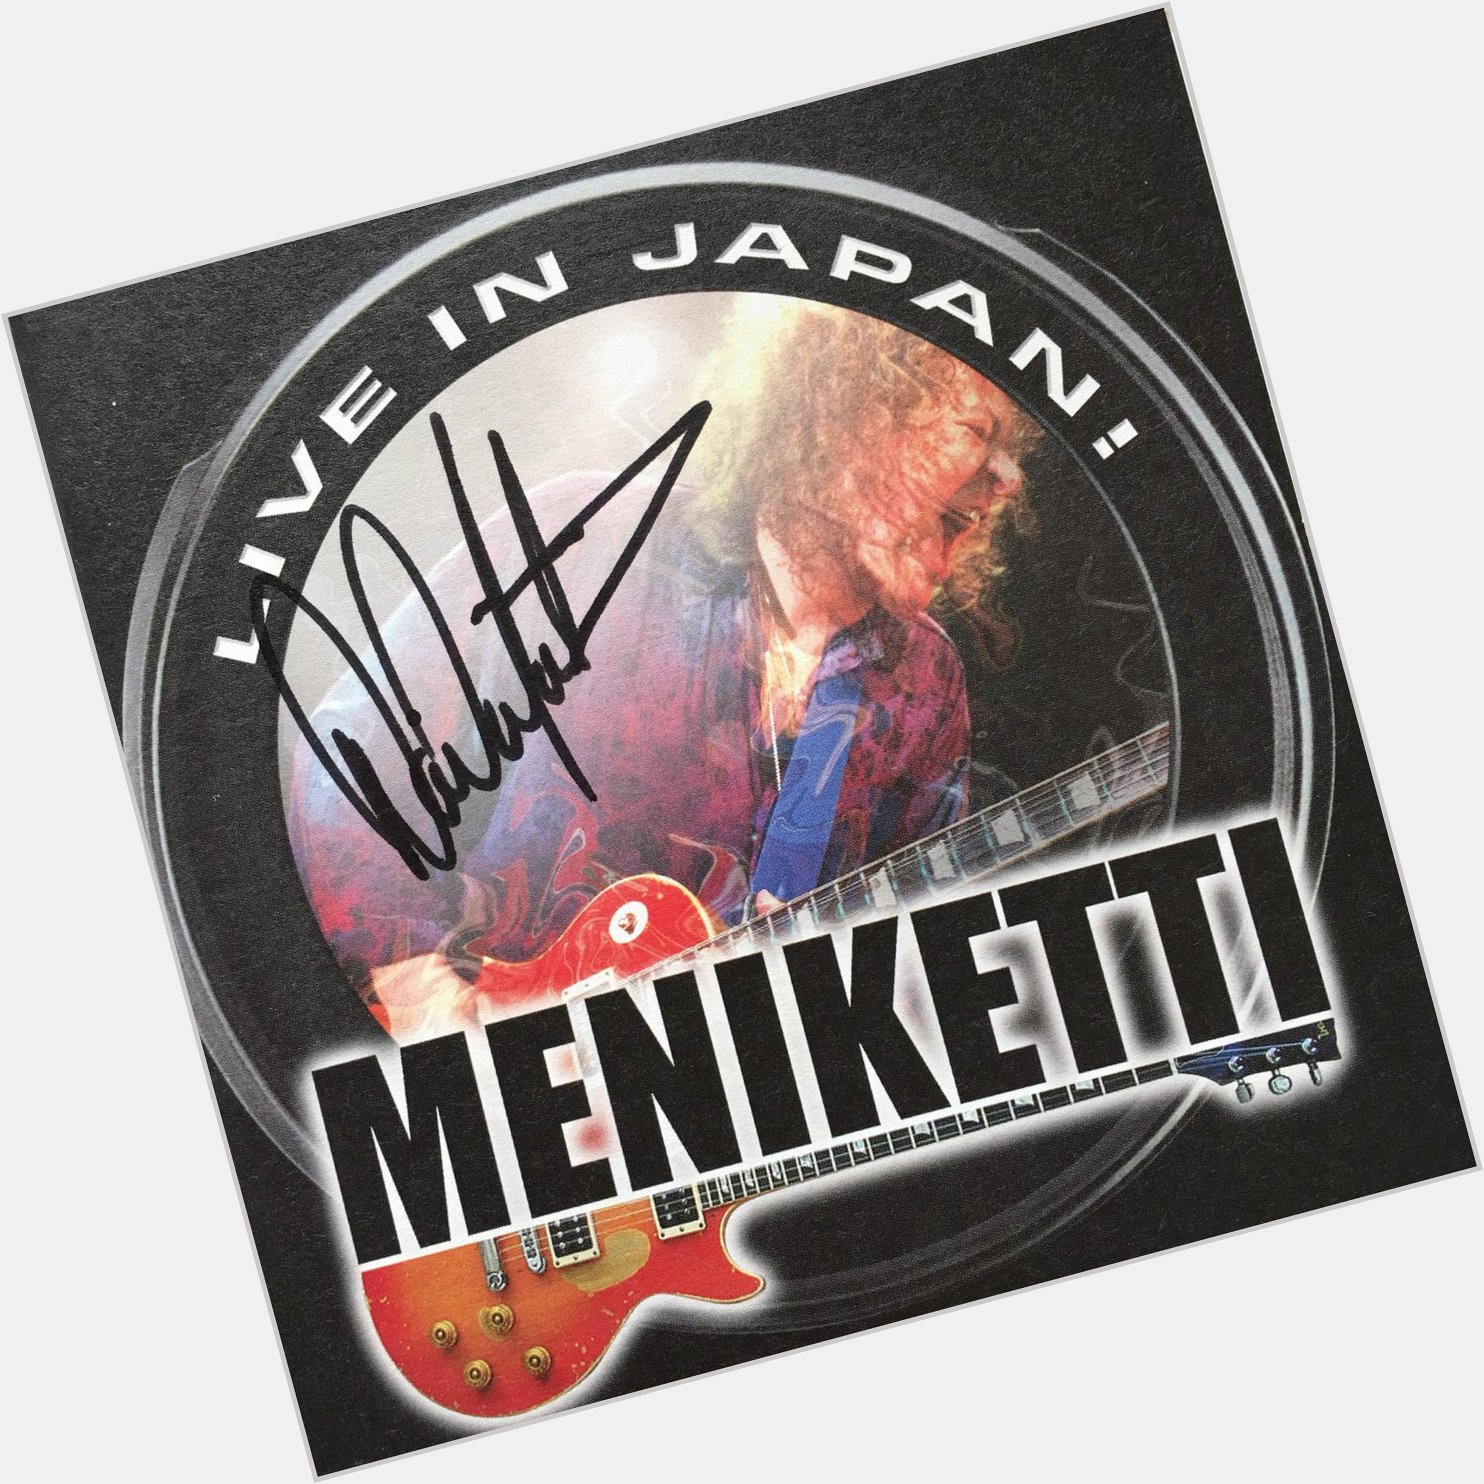                  MENIKETTI / Live In Japan
Happy Birthday! Dave Meniketti 